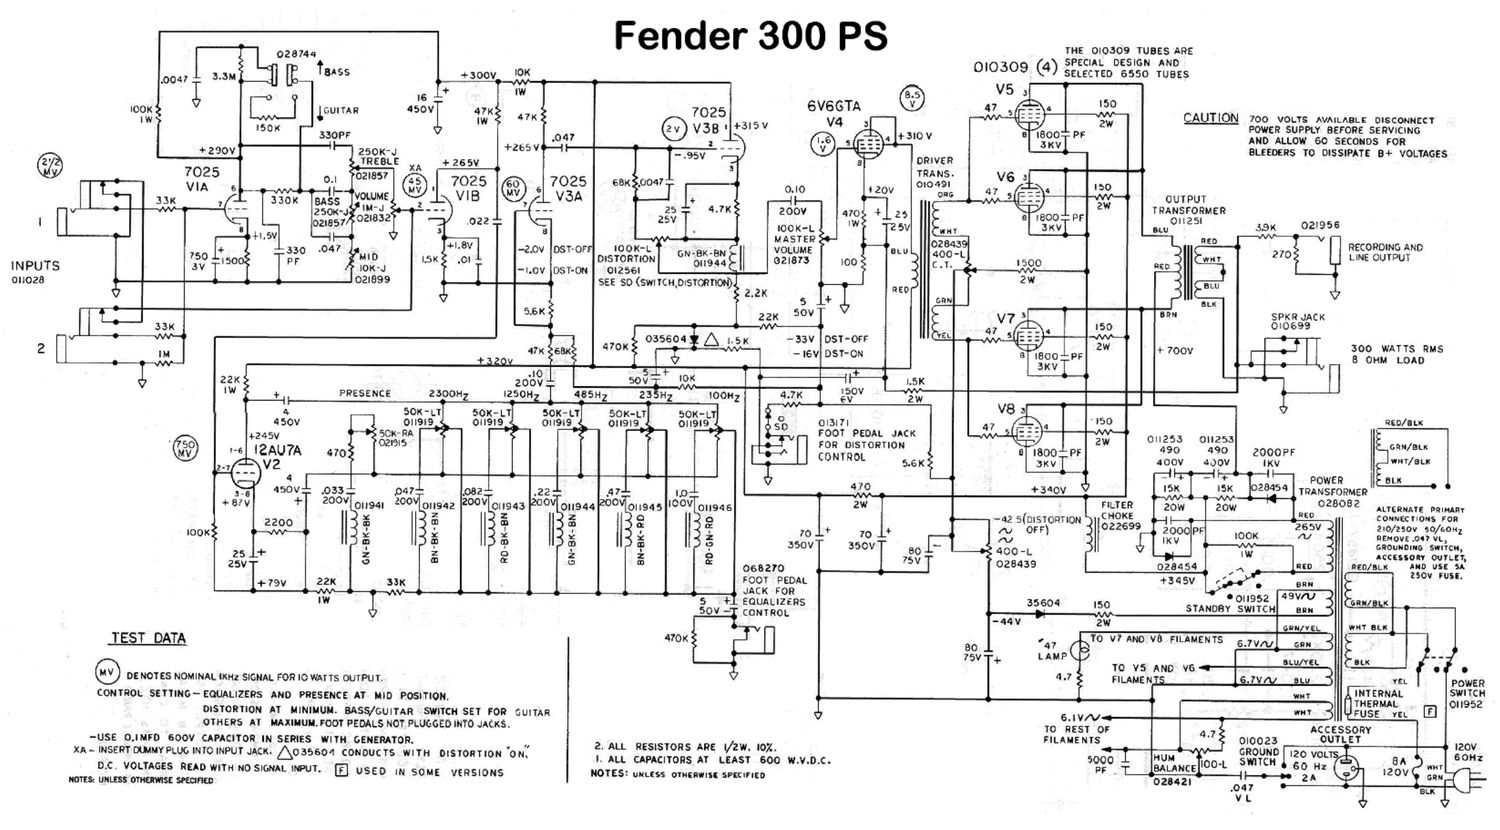 fender 300 PS schematic